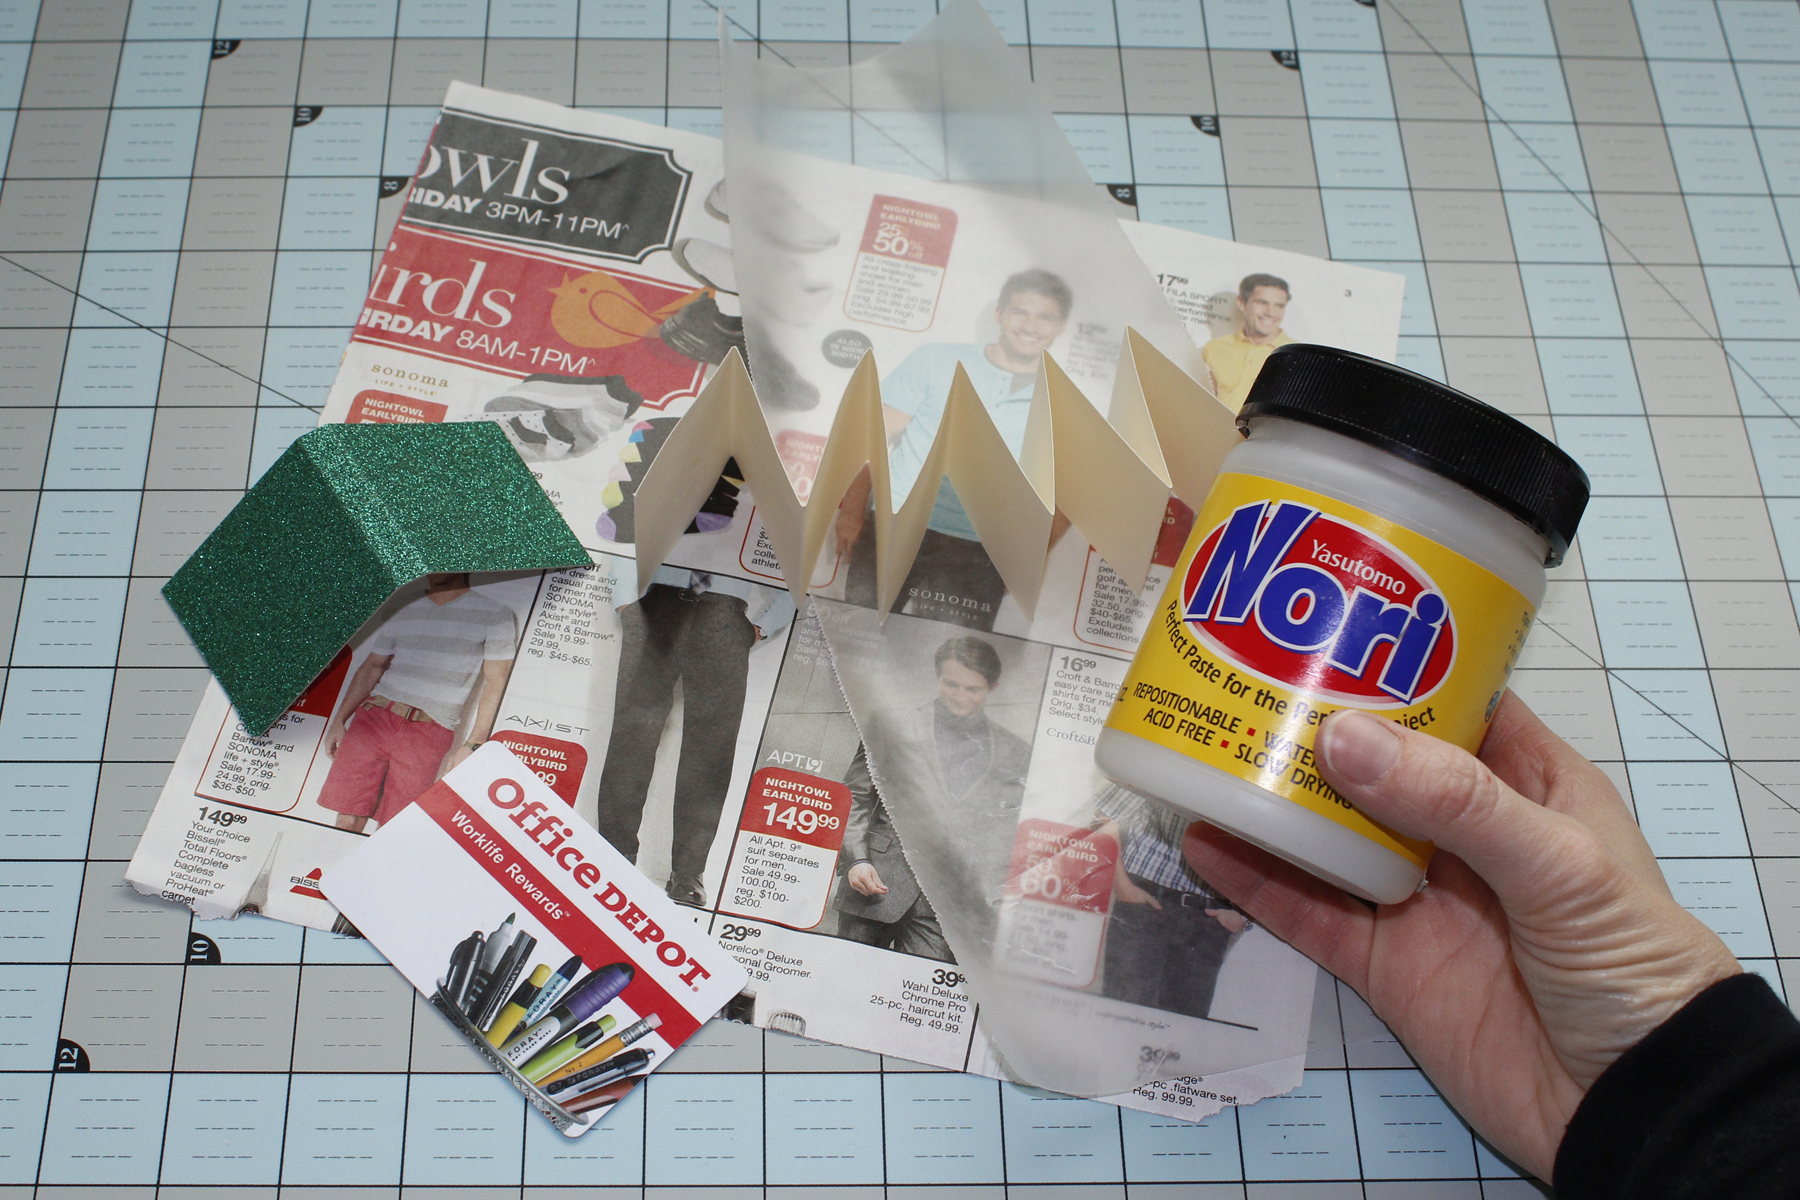 How to glue stuff like a crafty mofo – LobeStir